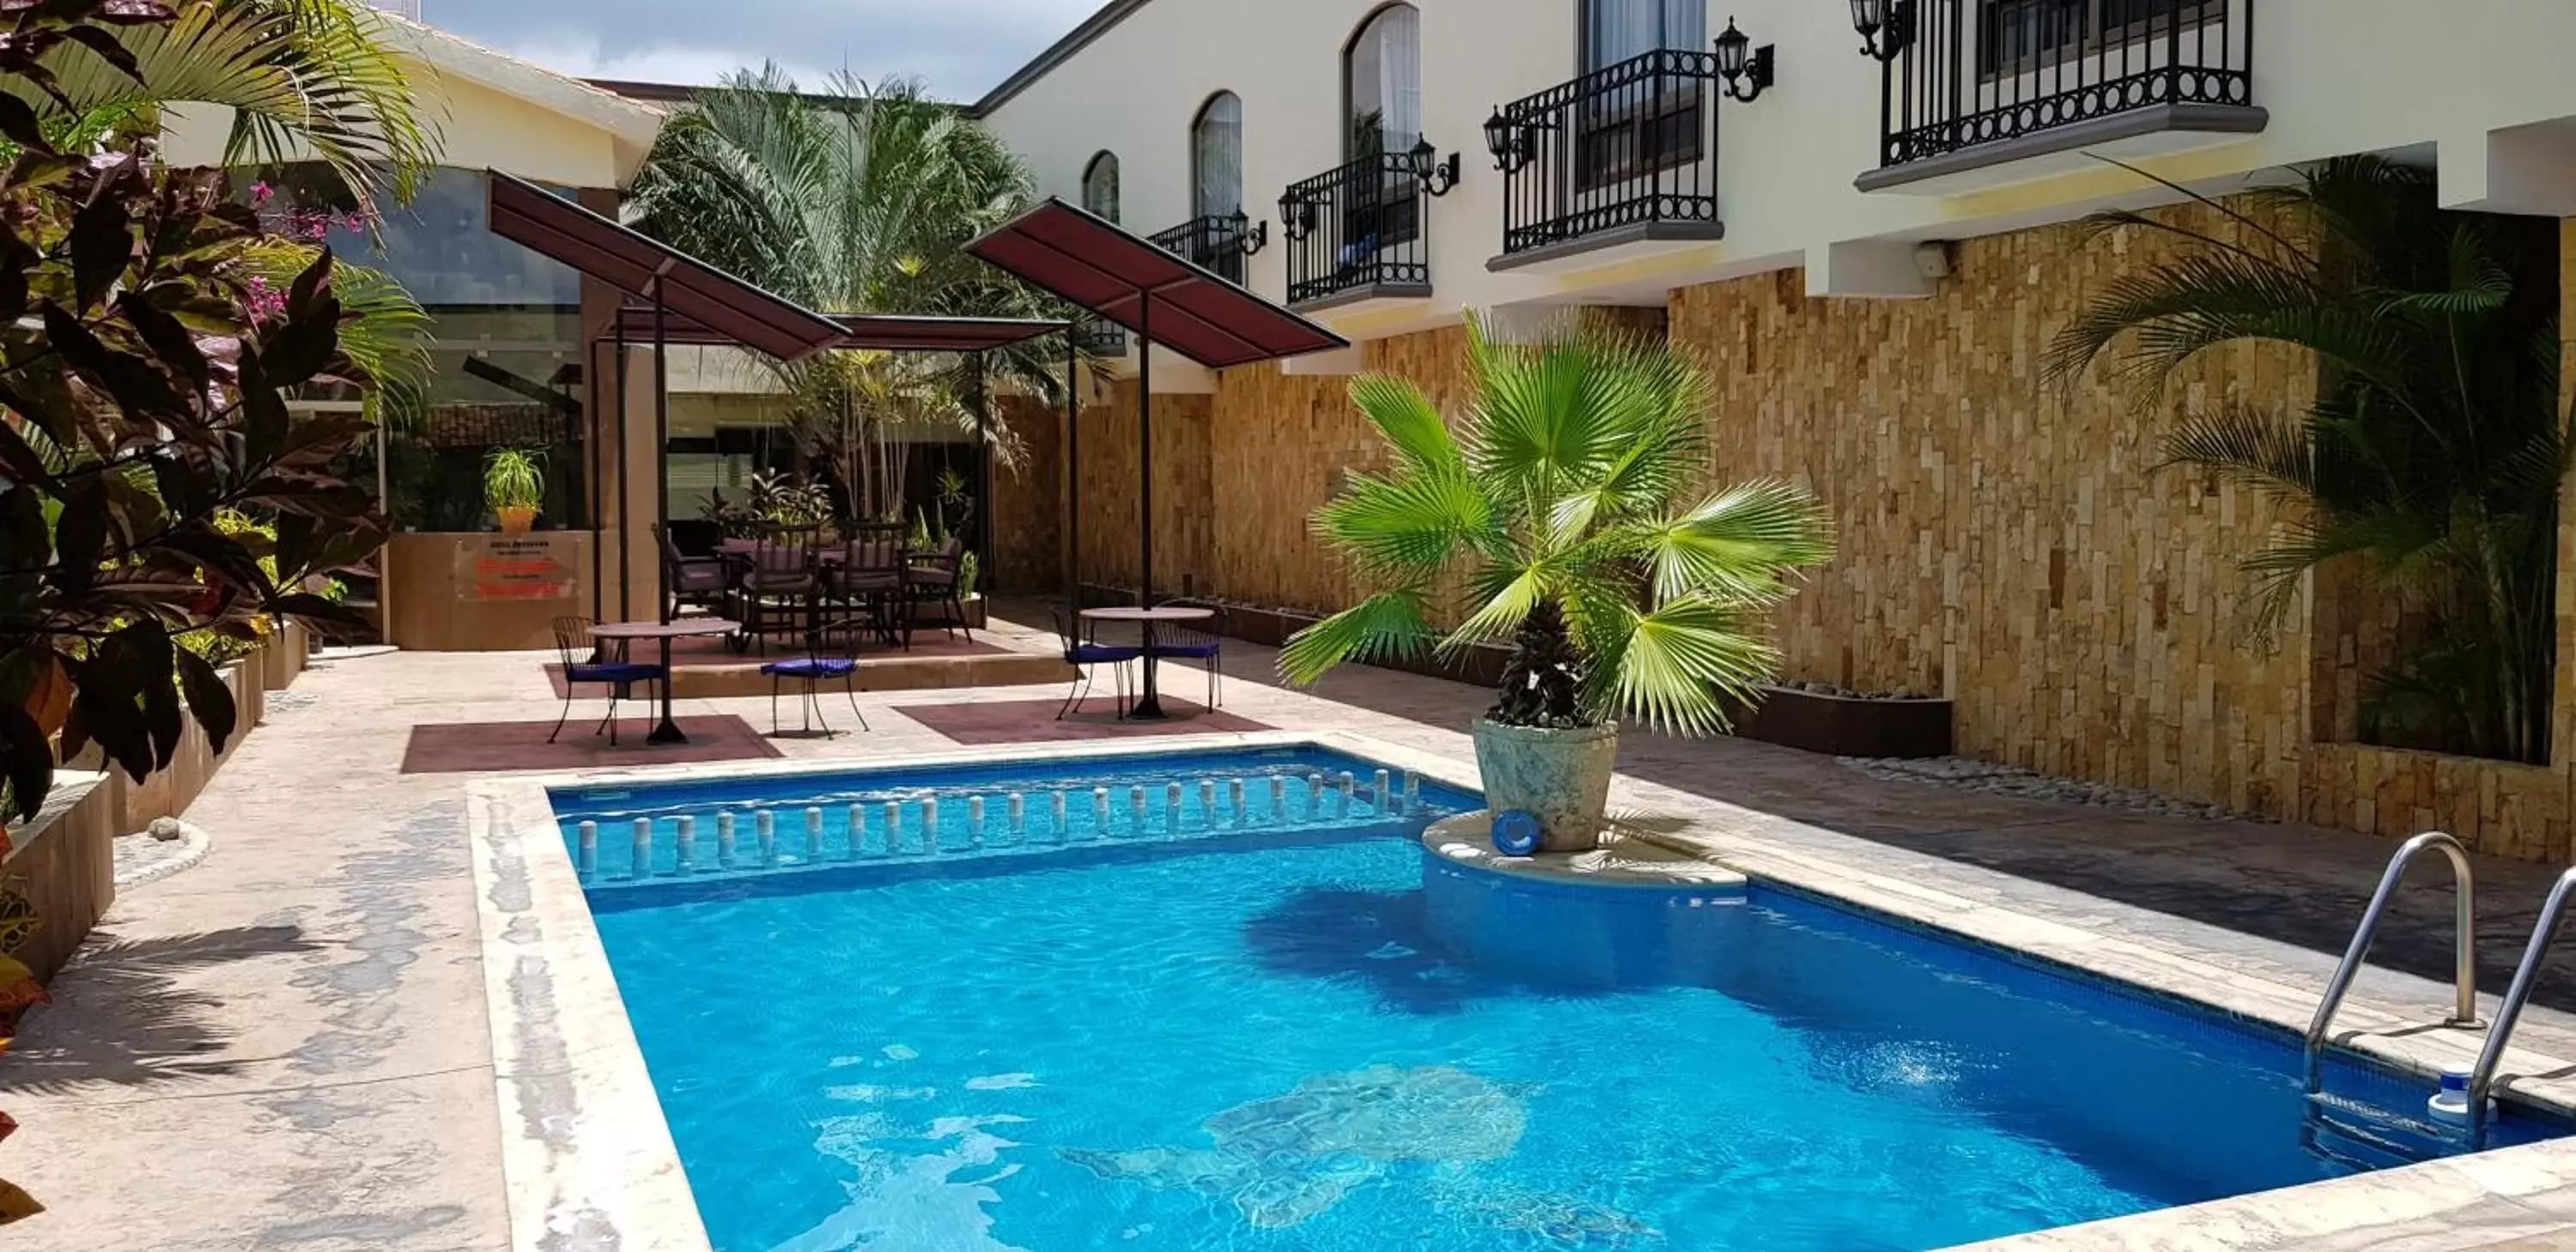 Swimming Pool in Hotel Dubrovnik